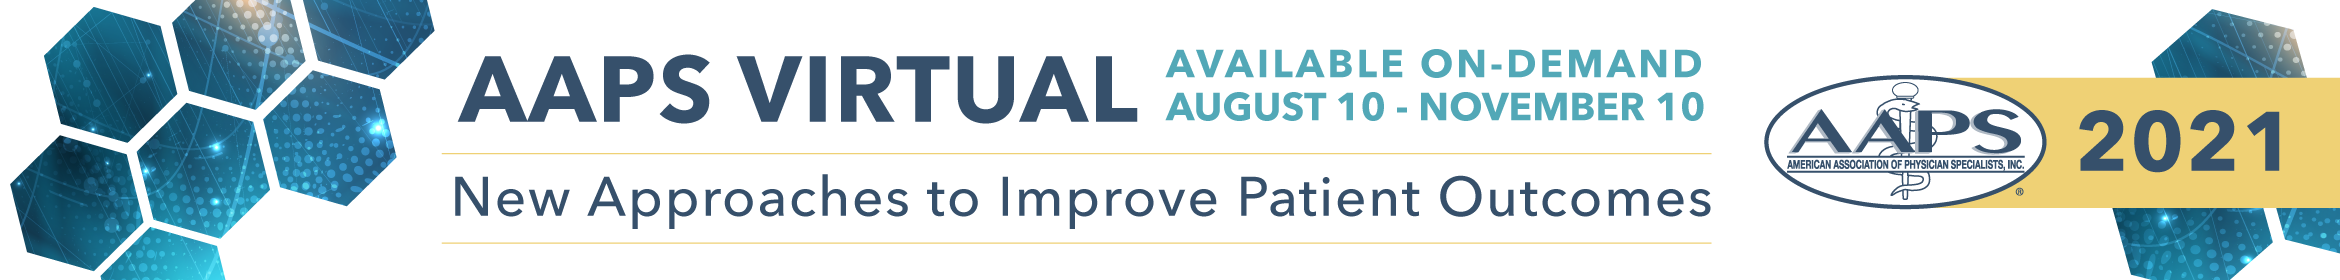 AAPS Virtual 2021 Main banner